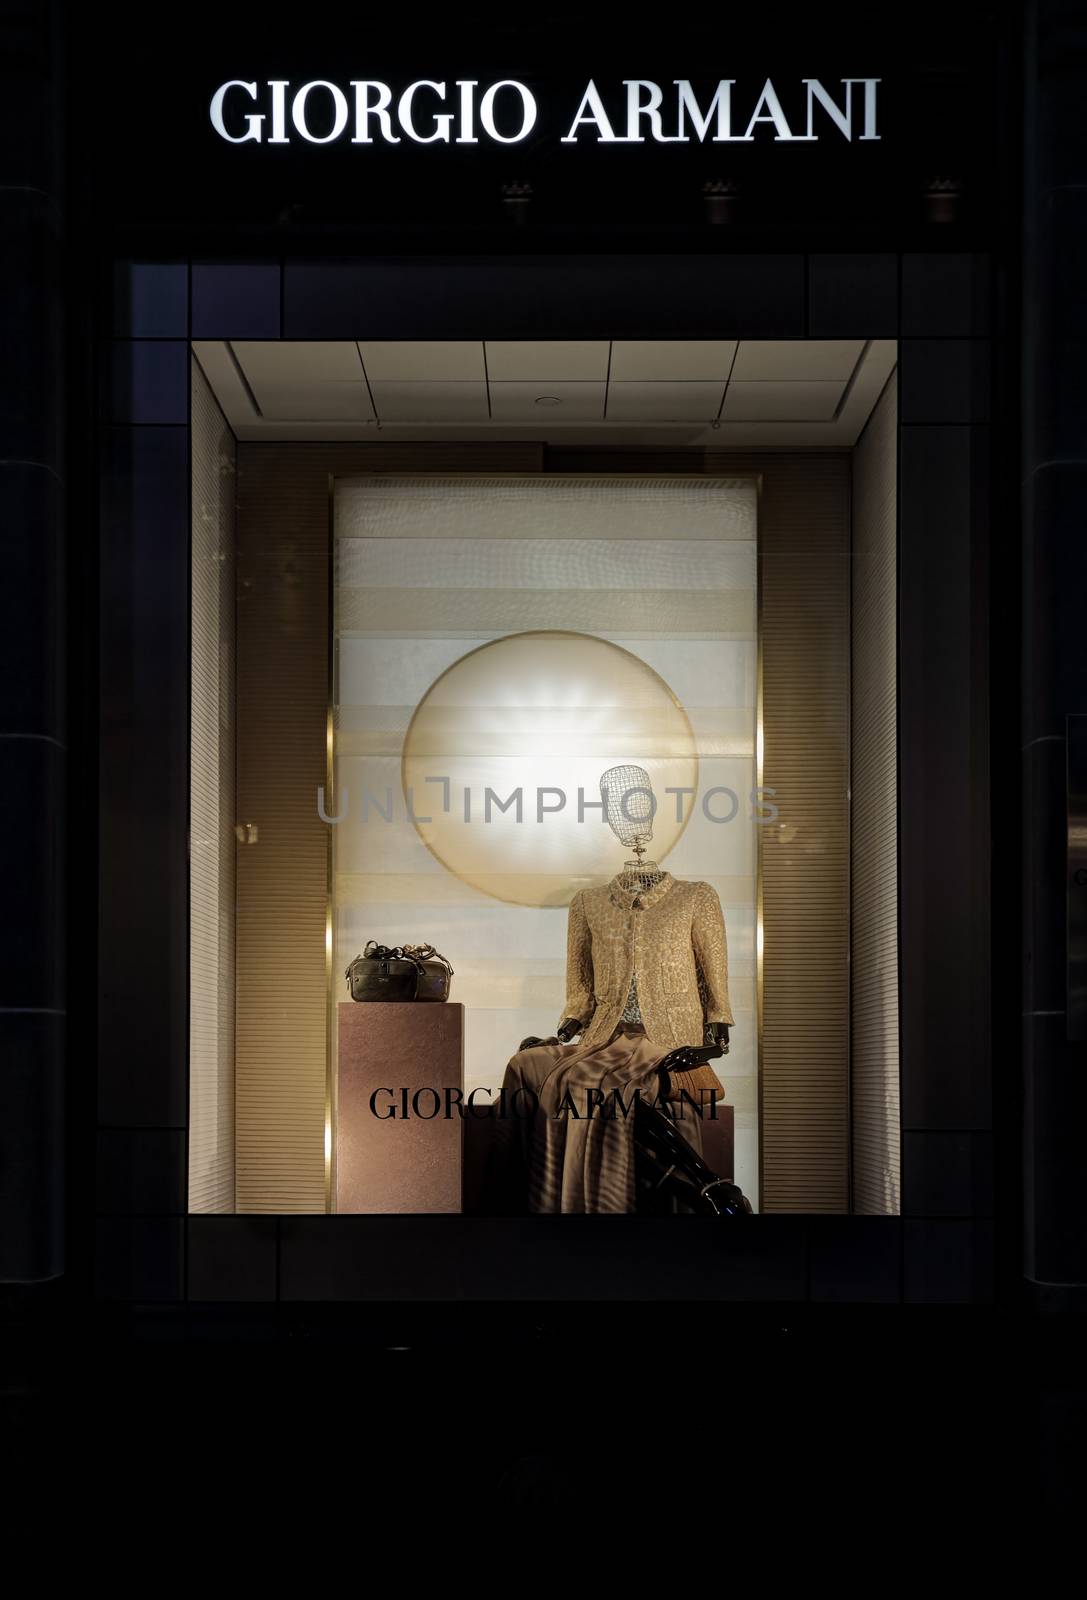 Retail shop display of Giorgio Armani by lovleah